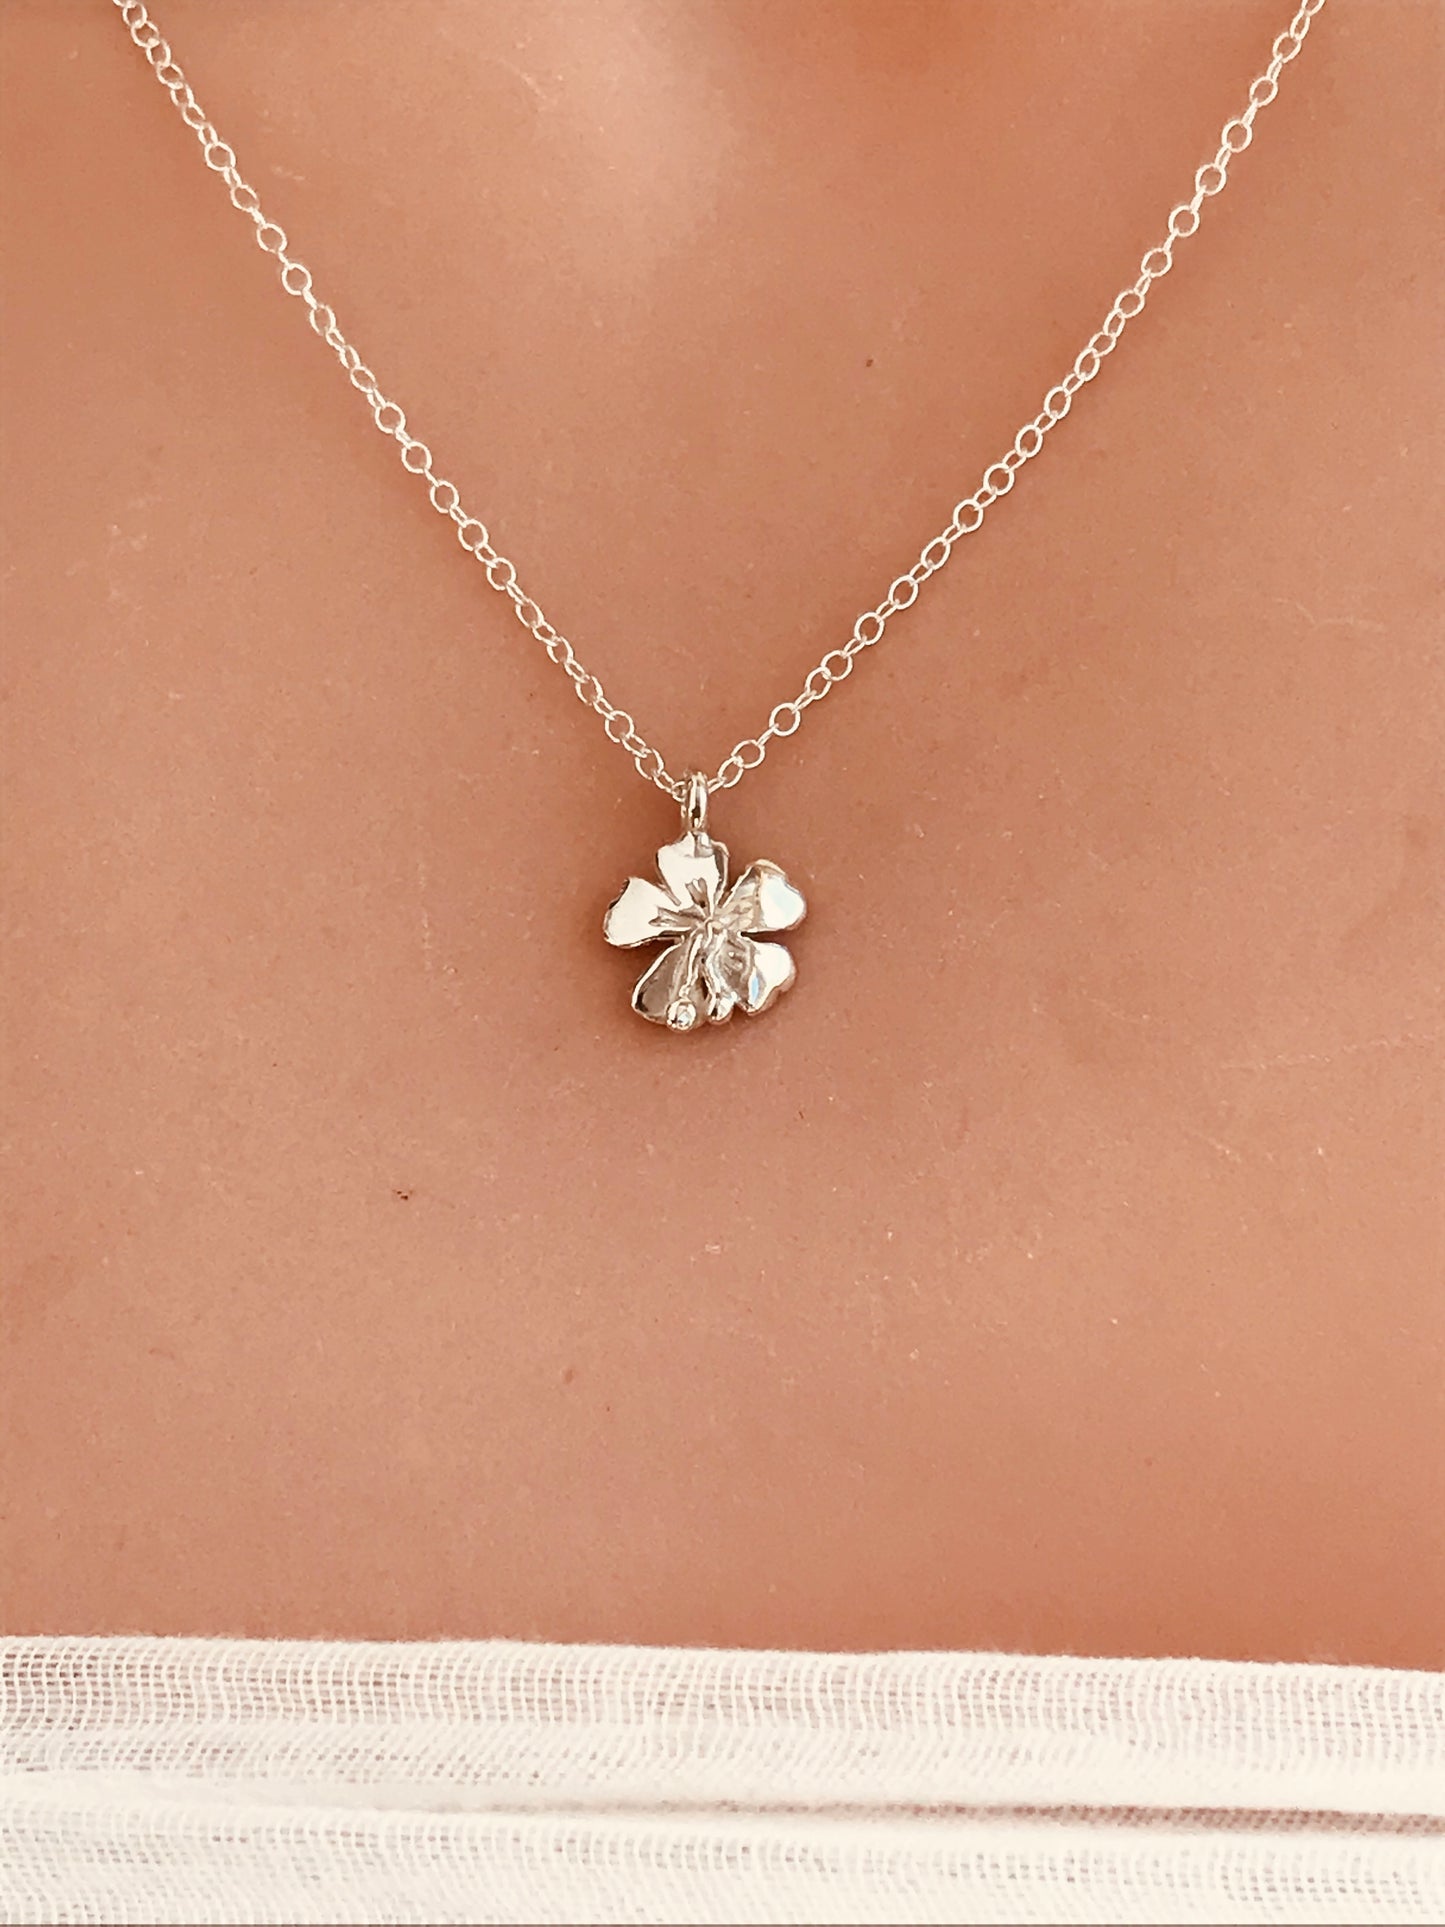 Hibiscus flower necklace